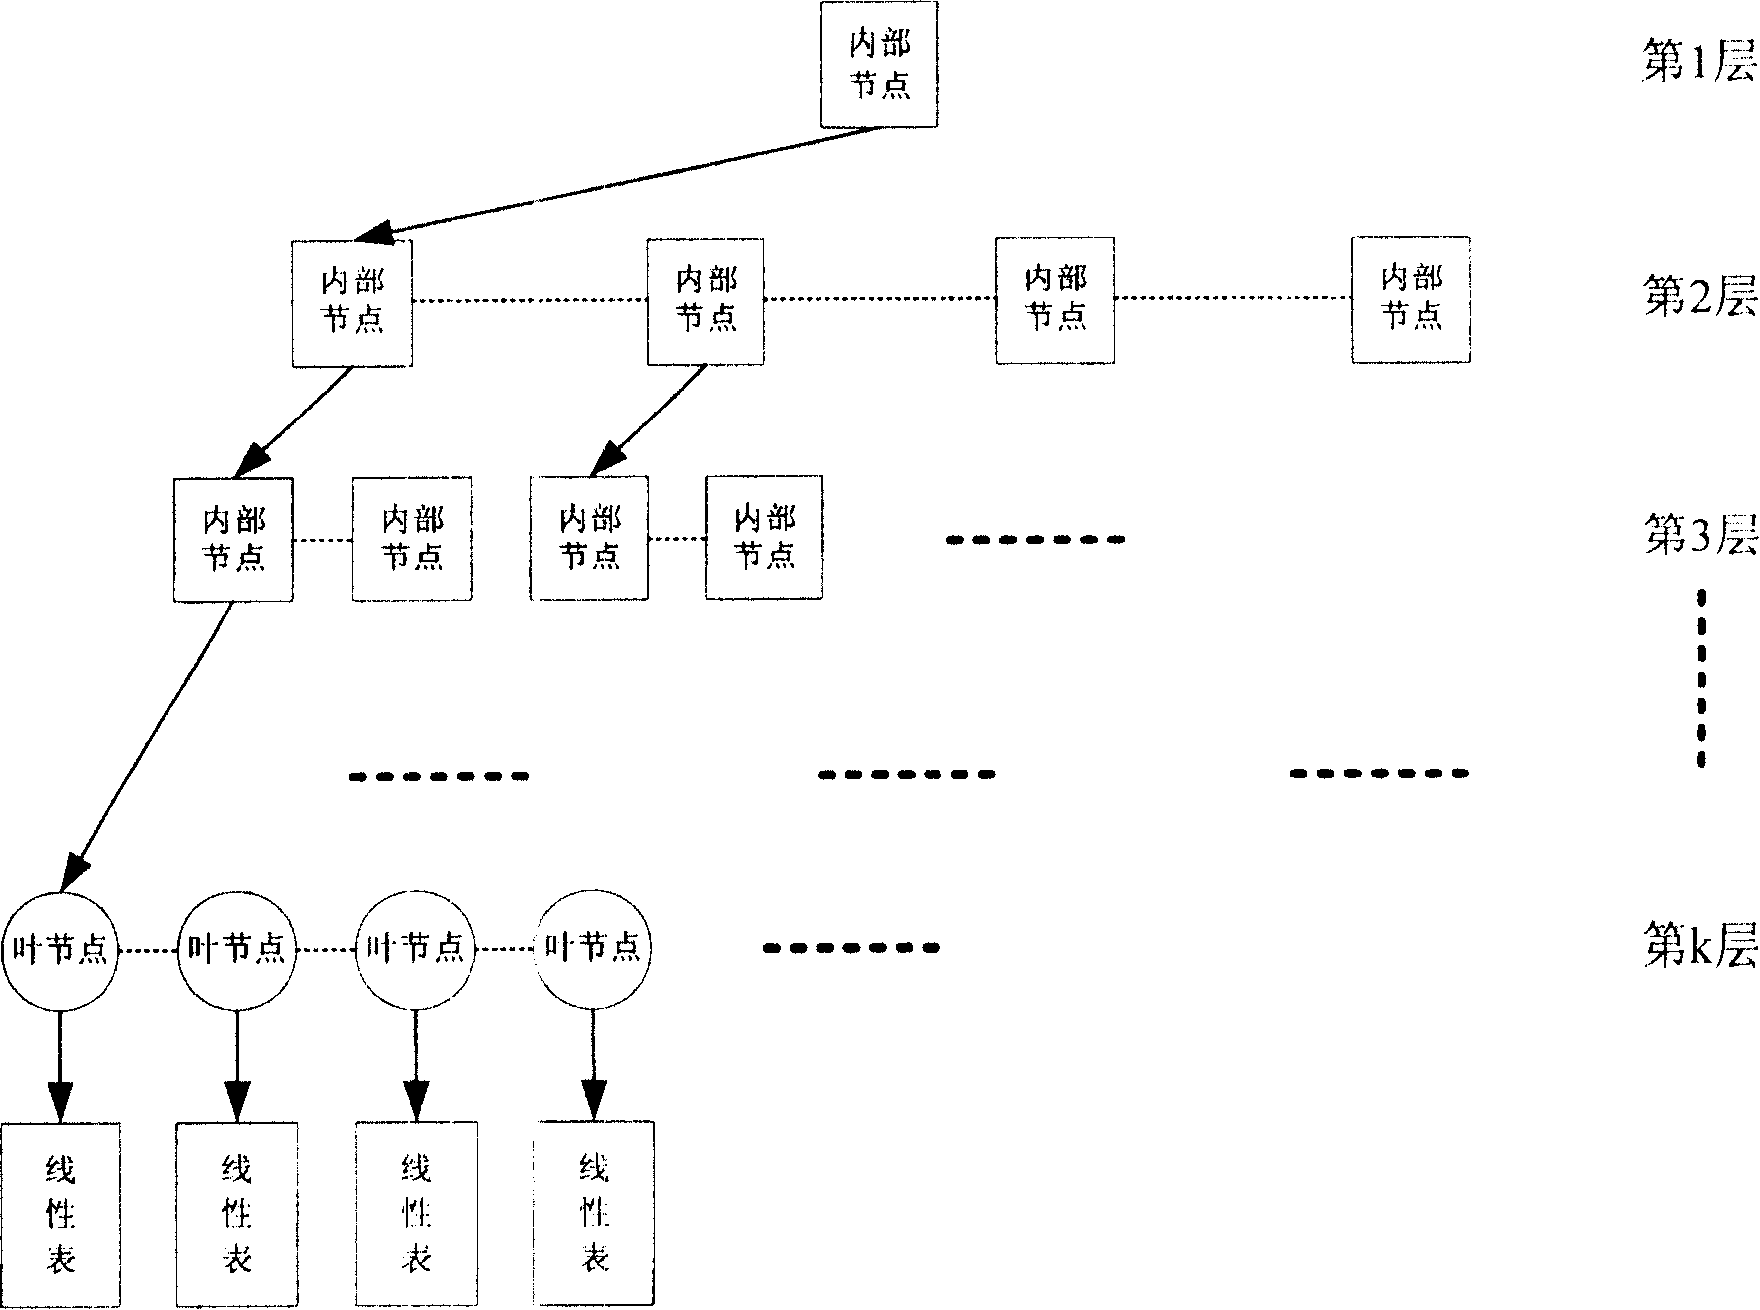 Multi-domain net packet classifying method based on network flow